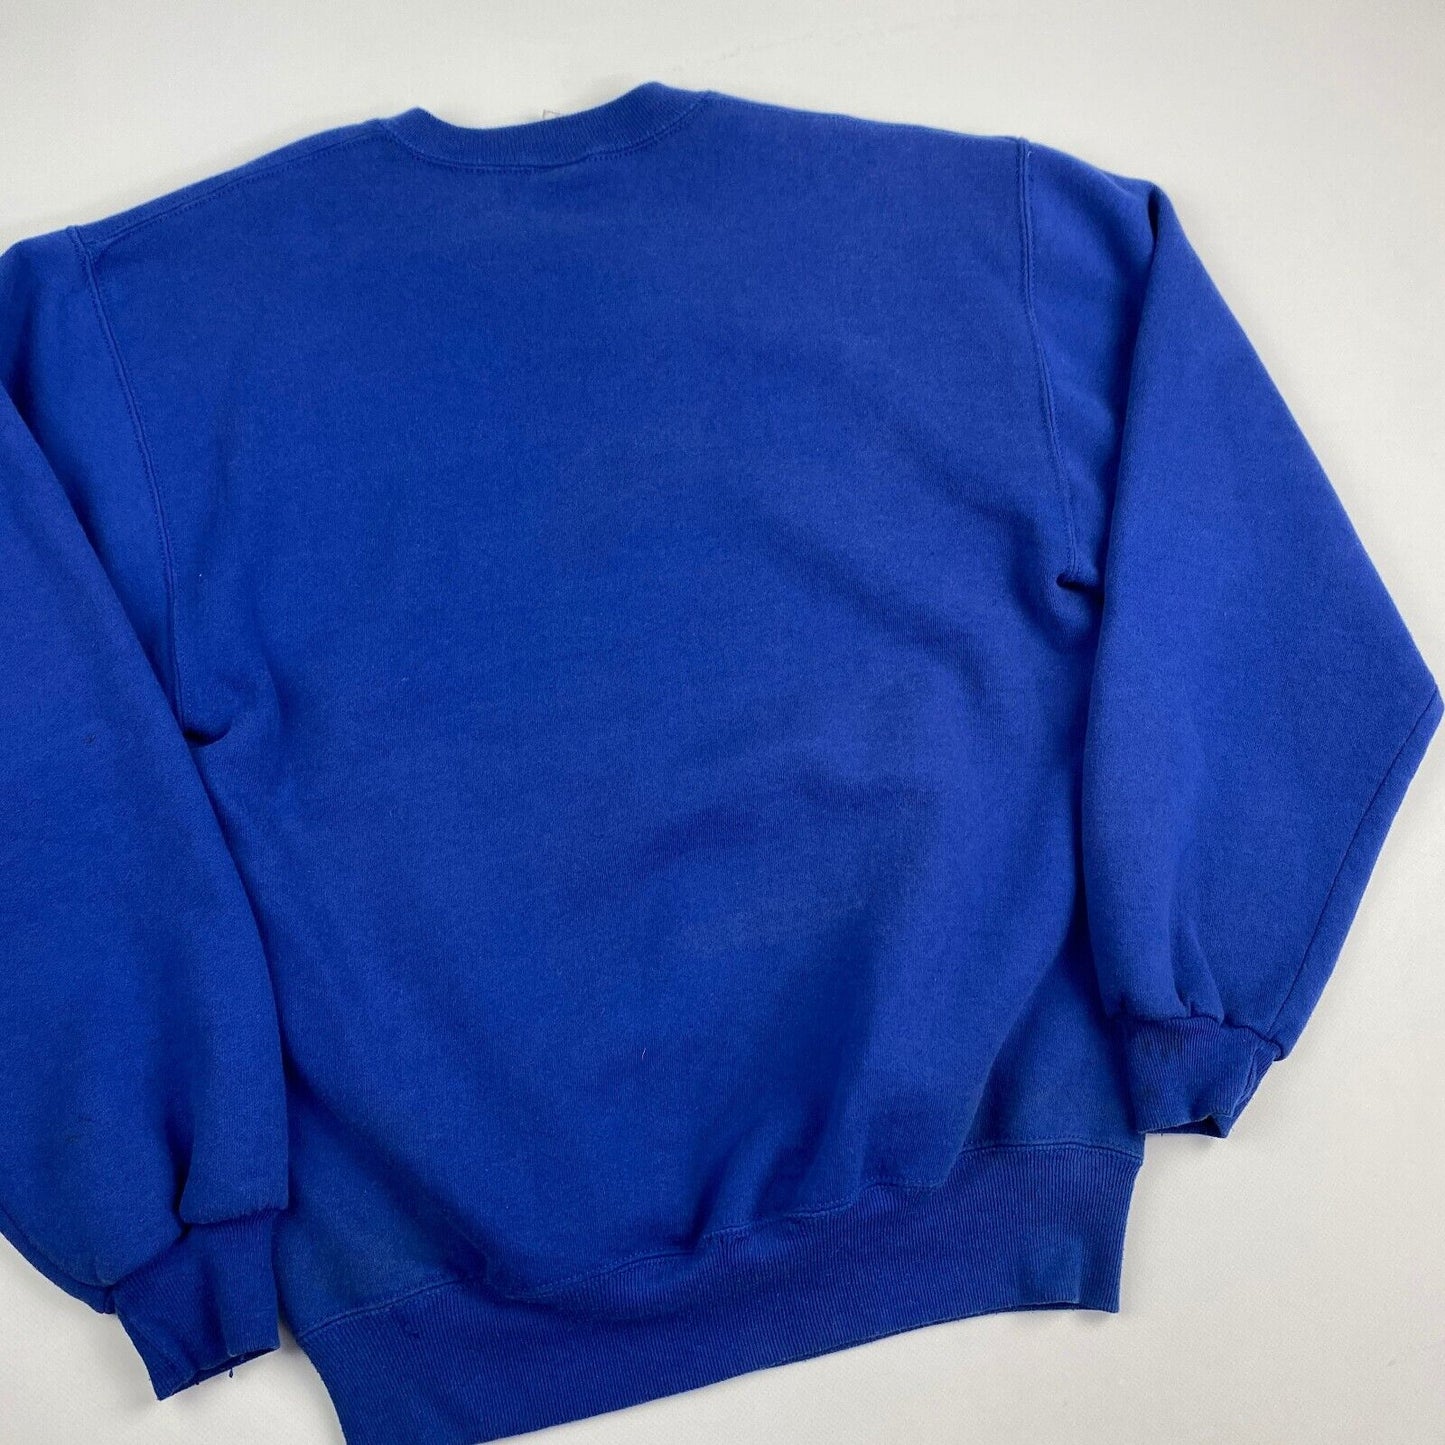 VINTAGE 90s Russell Athletic Blank Blue Crewneck Sweater sz Medium Men MadeinUSA